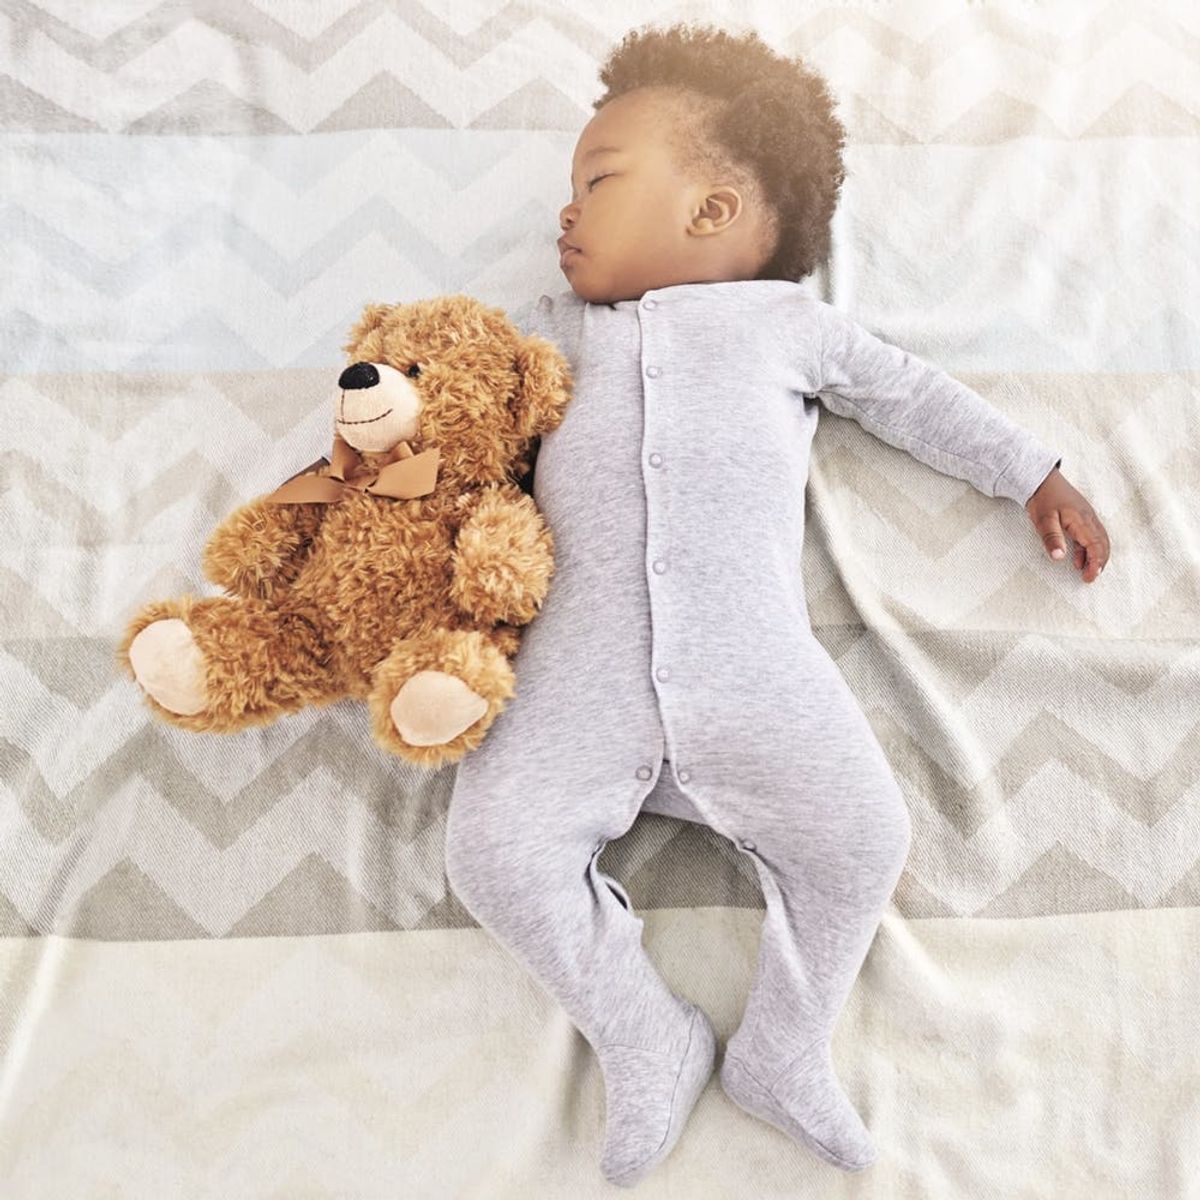 5 Sweet Lullabies to Soothe Your Baby to Sleep